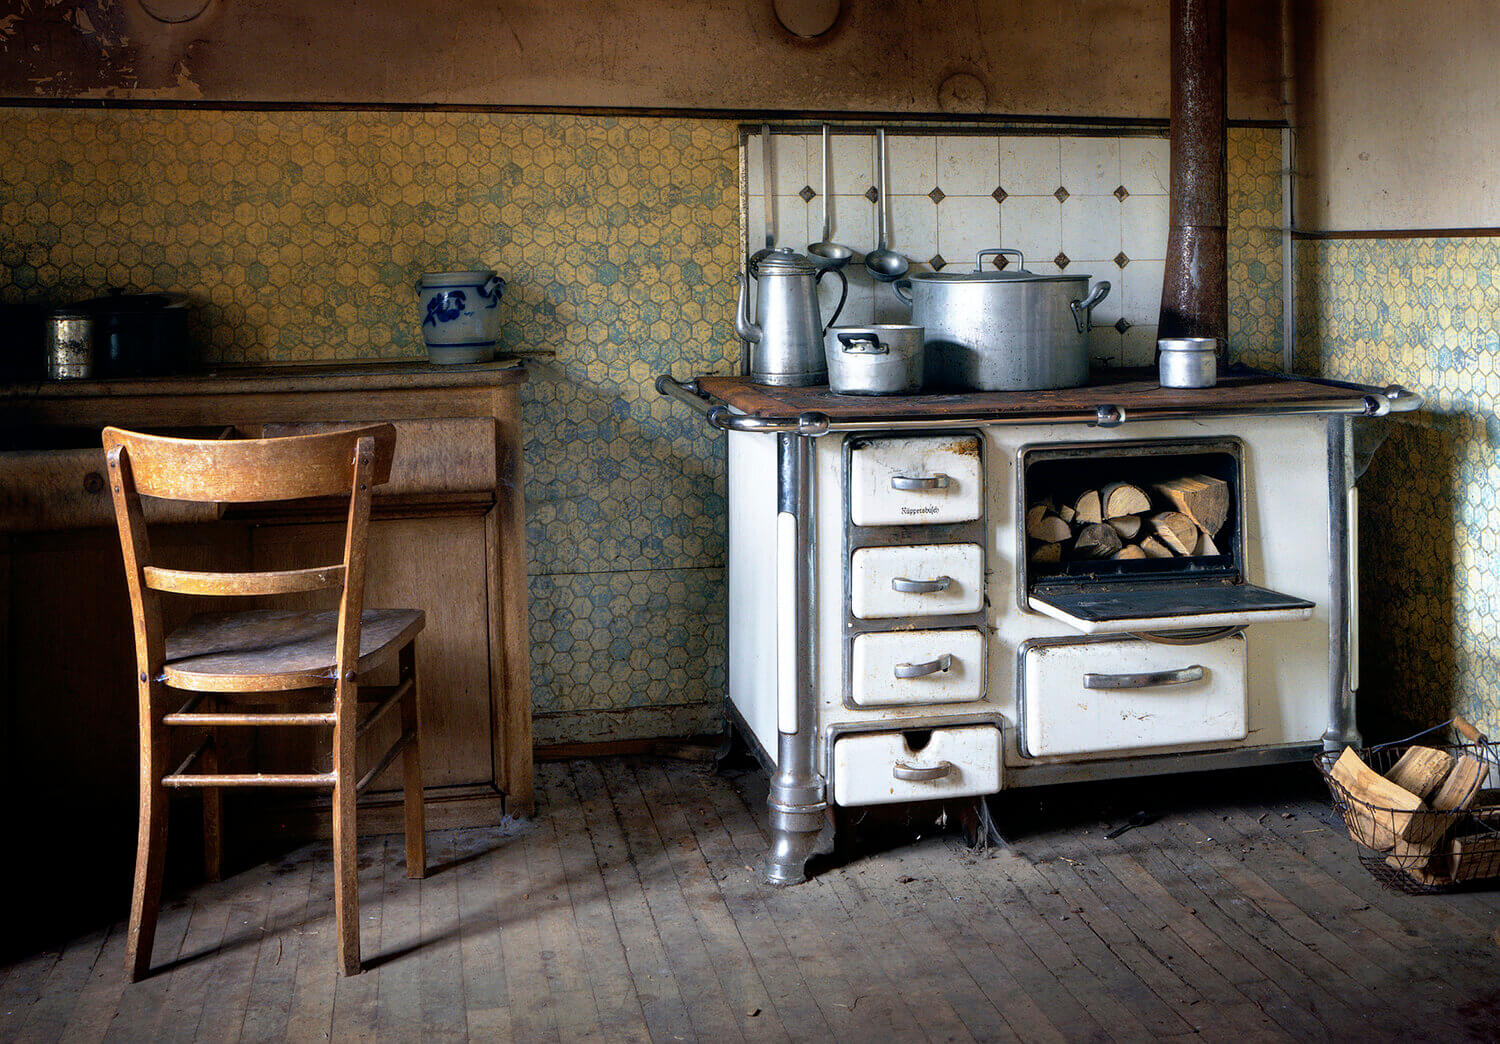 Matt Emmett's limited edition photograph of an old kitchen for Forgotten Heritage